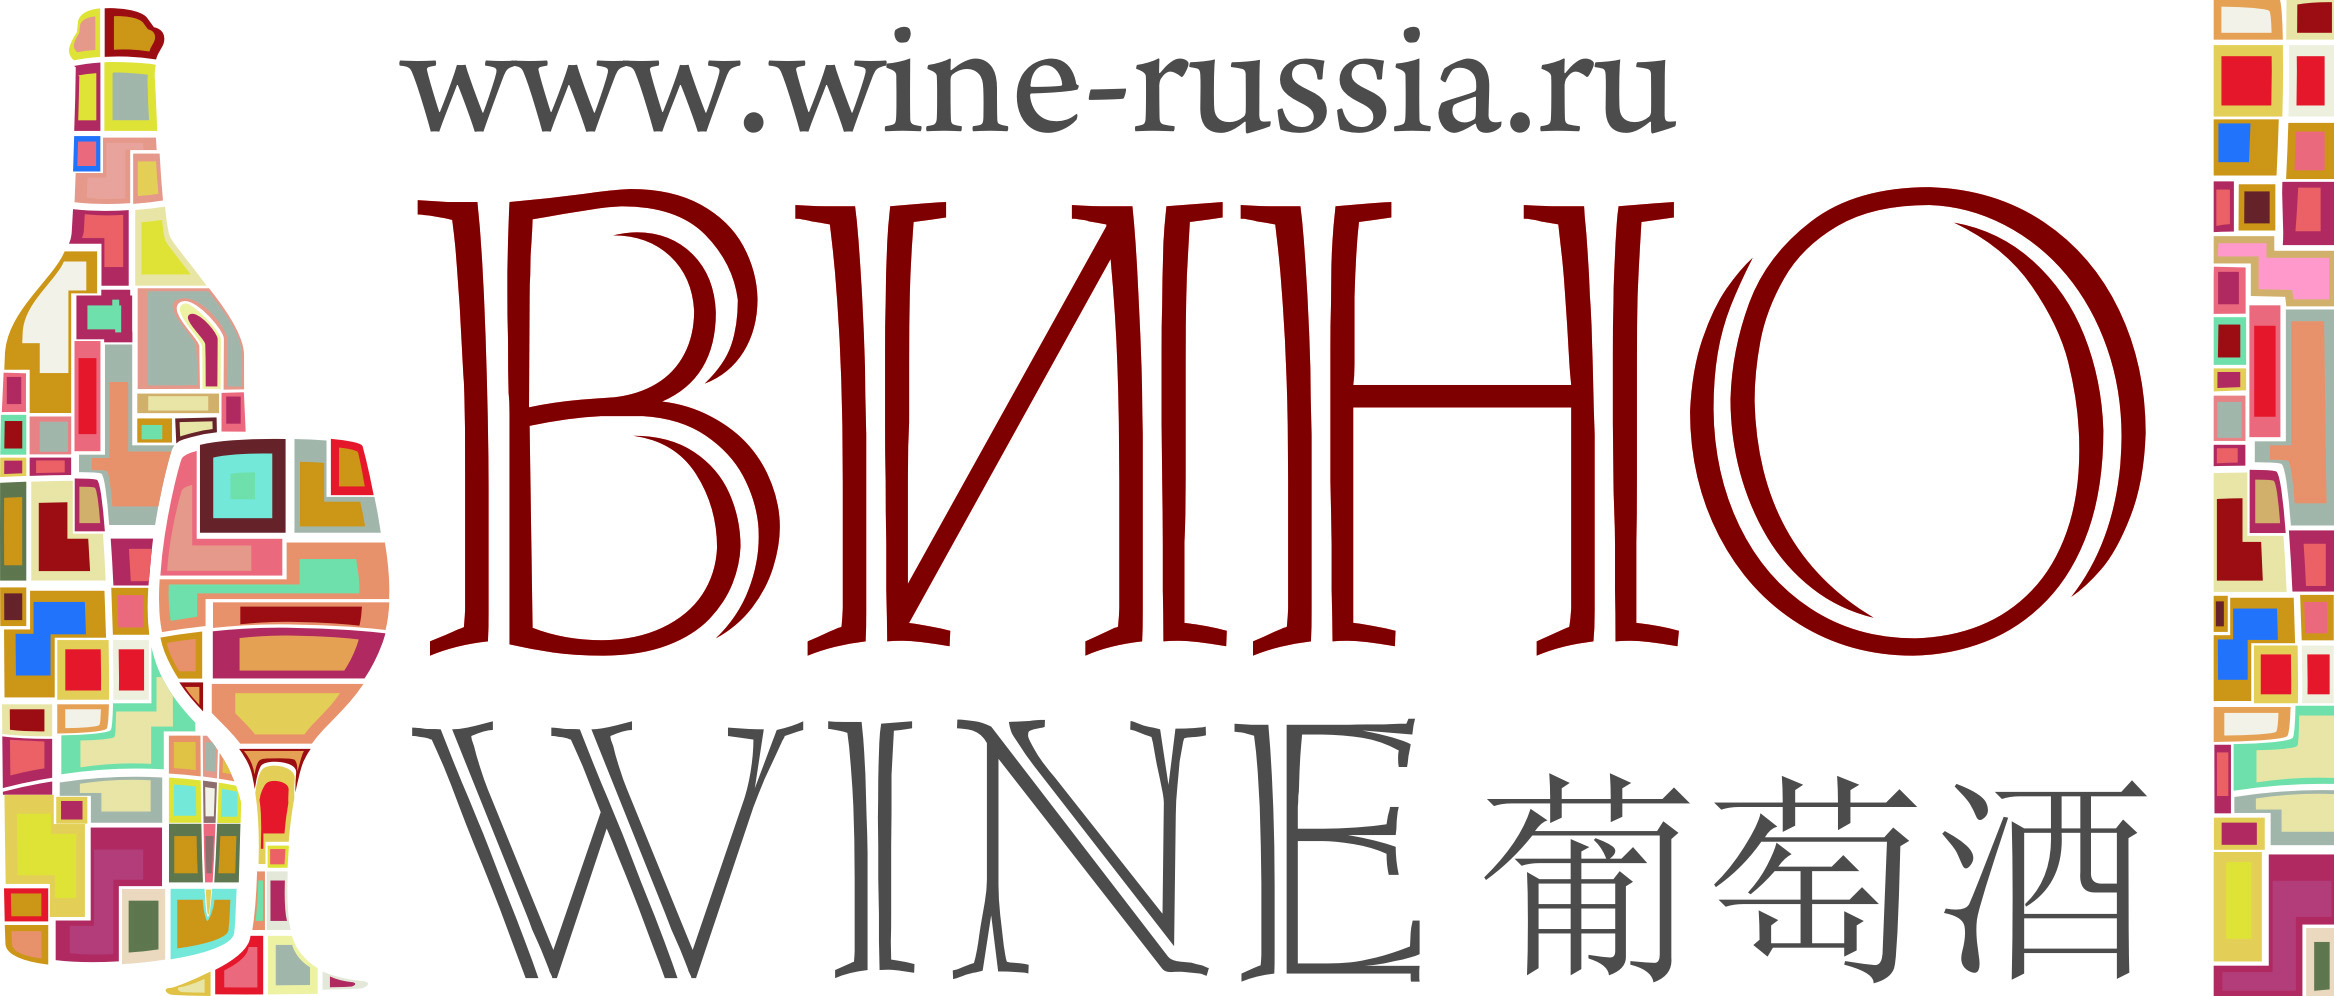 www.wine-russia.ru